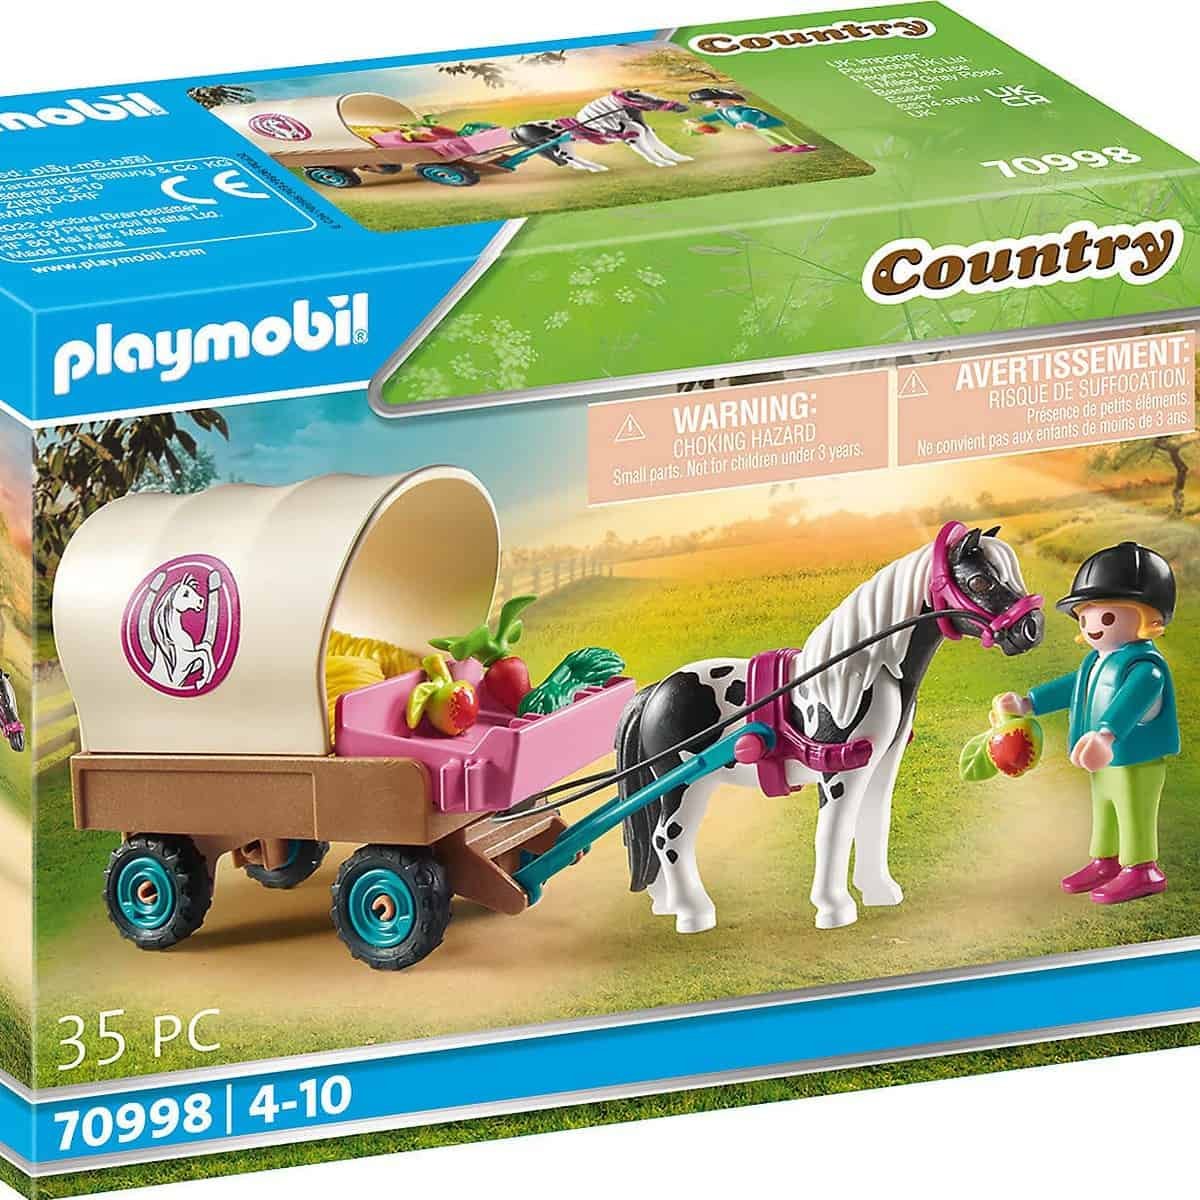 Playmobil Country () Ponykutsche